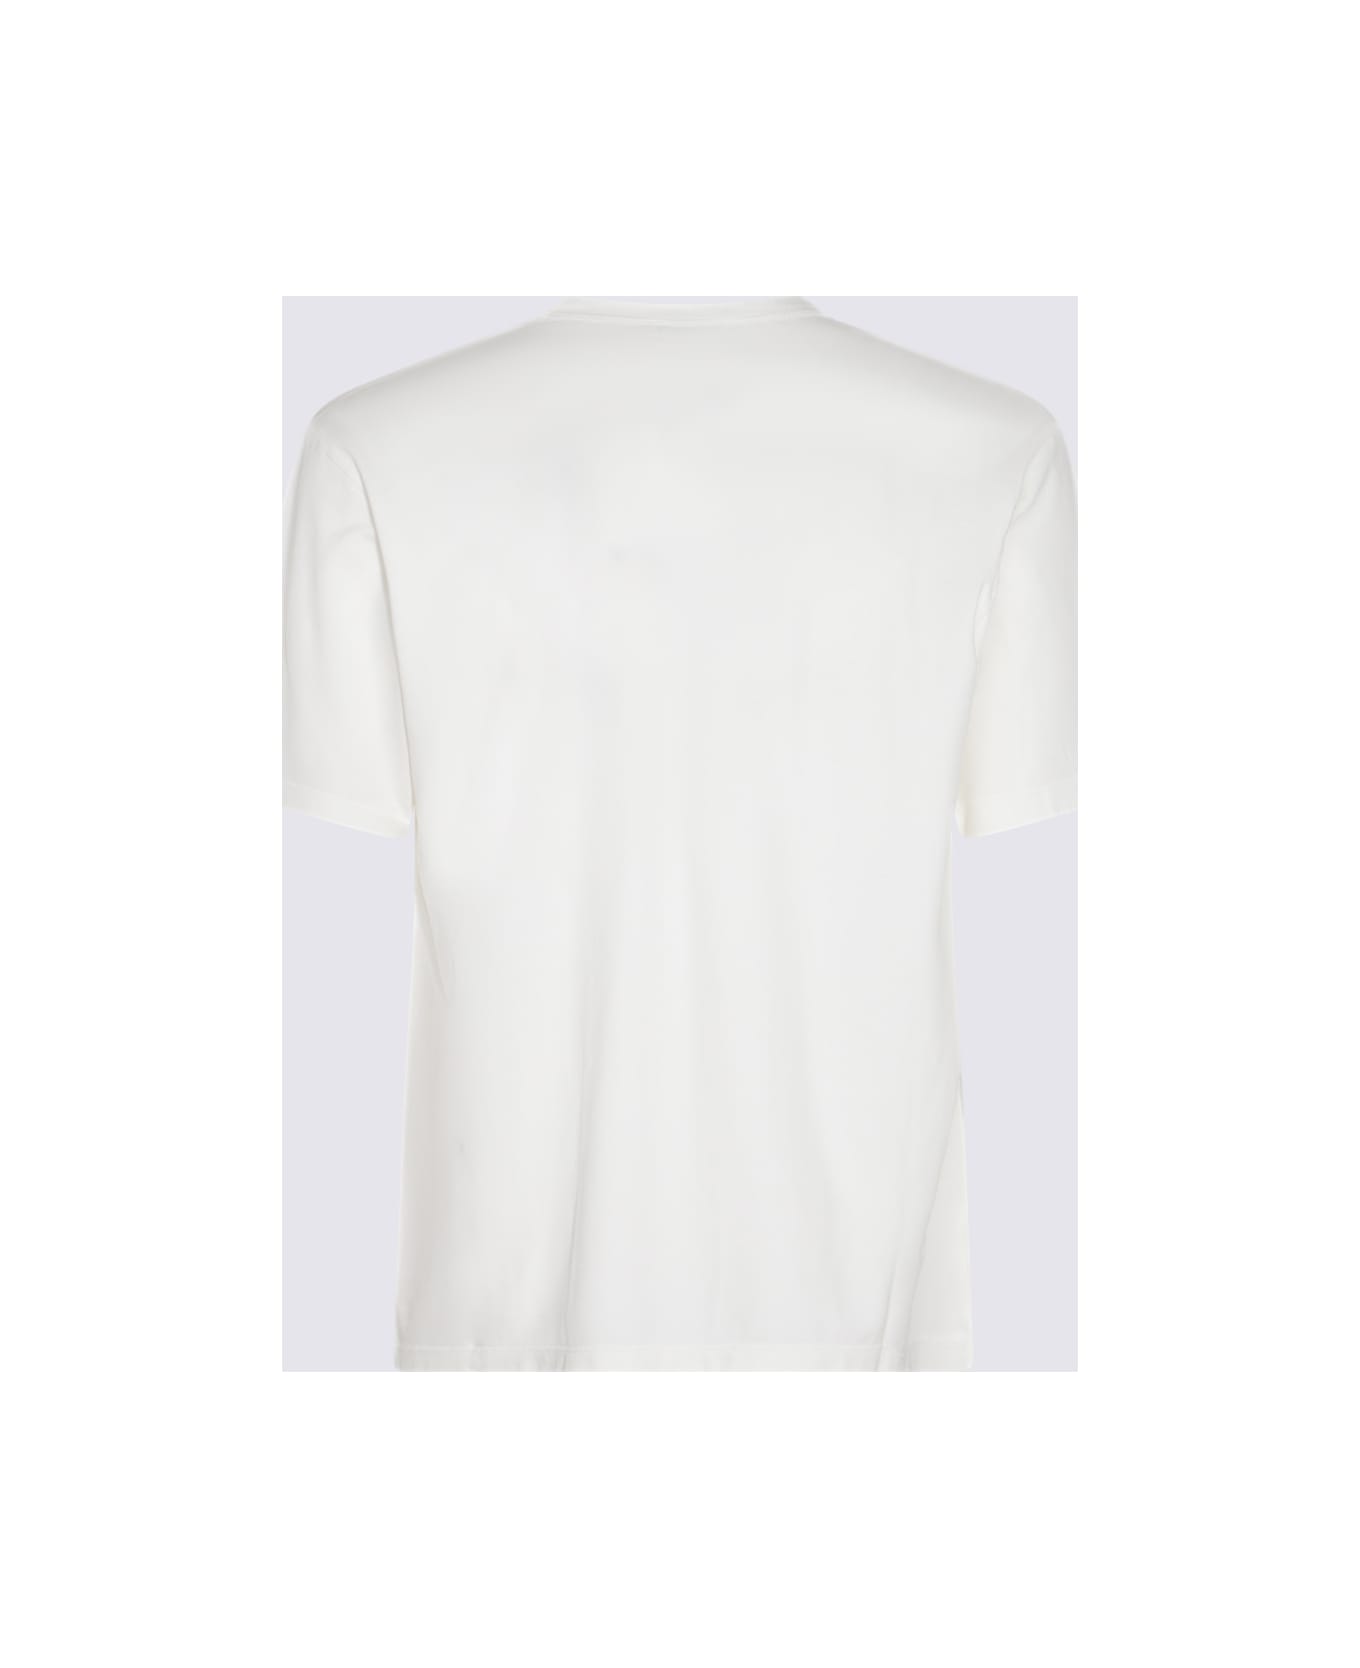 Piacenza Cashmere White Cotton T-shirt - White